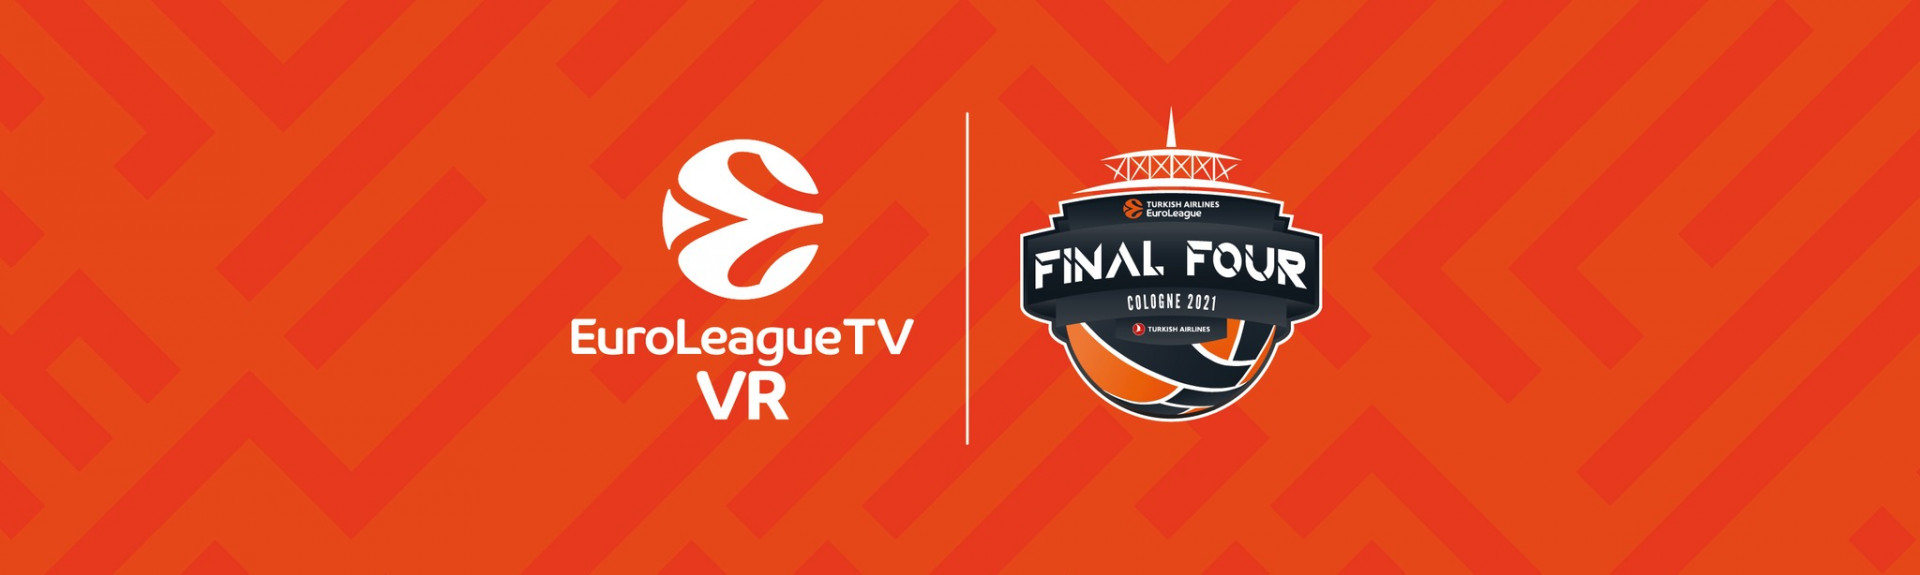 EuroleagueTV VR